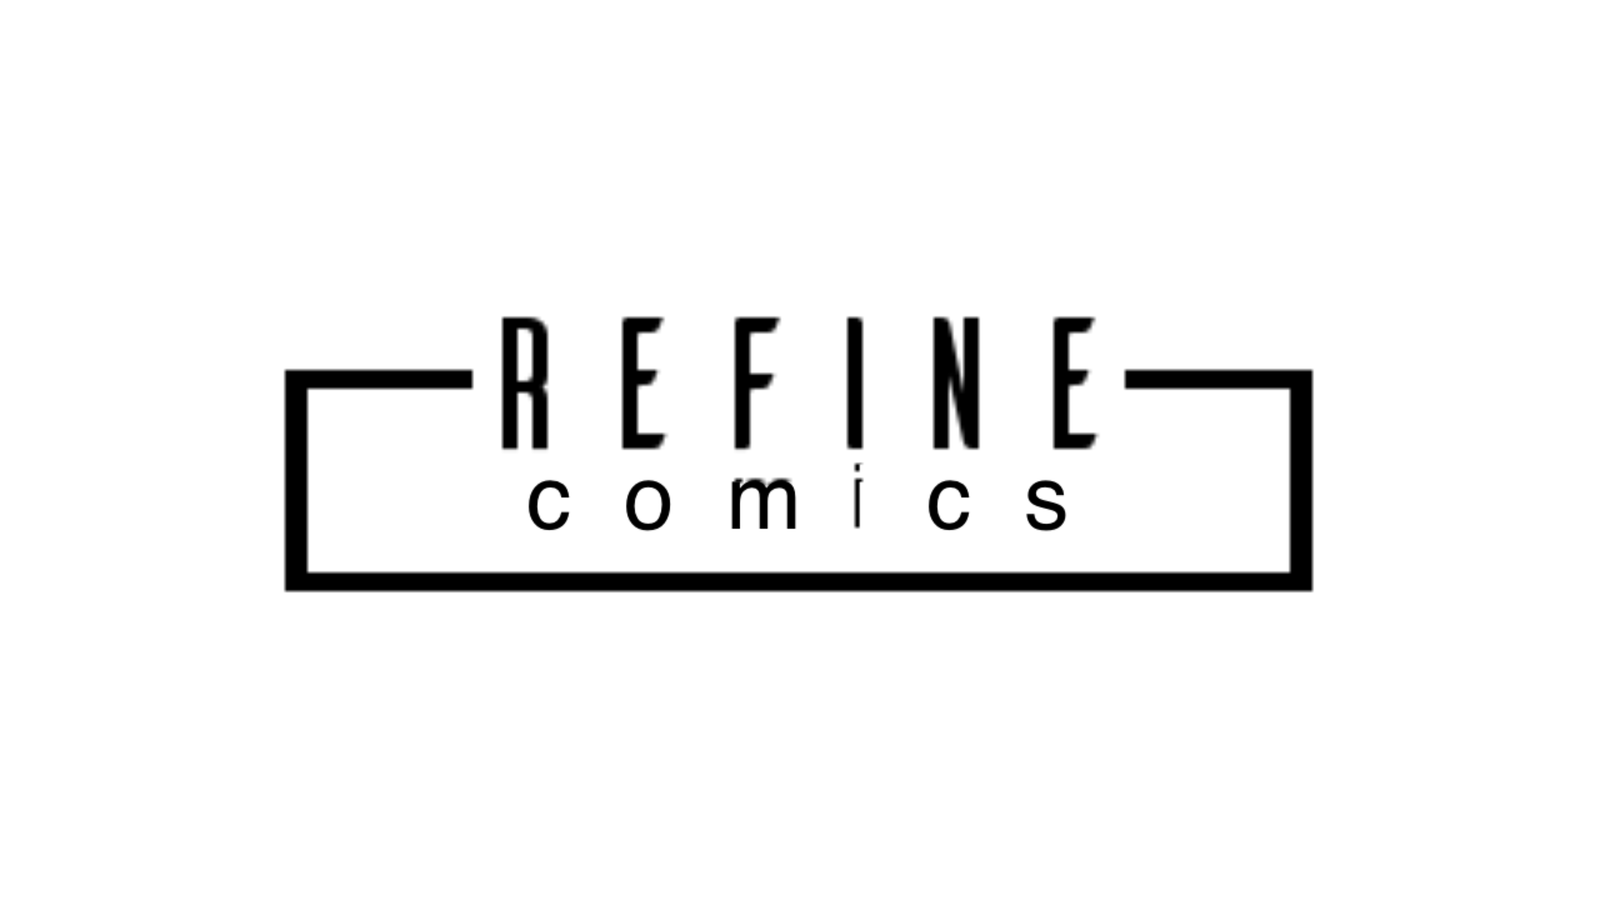 REFINE comics